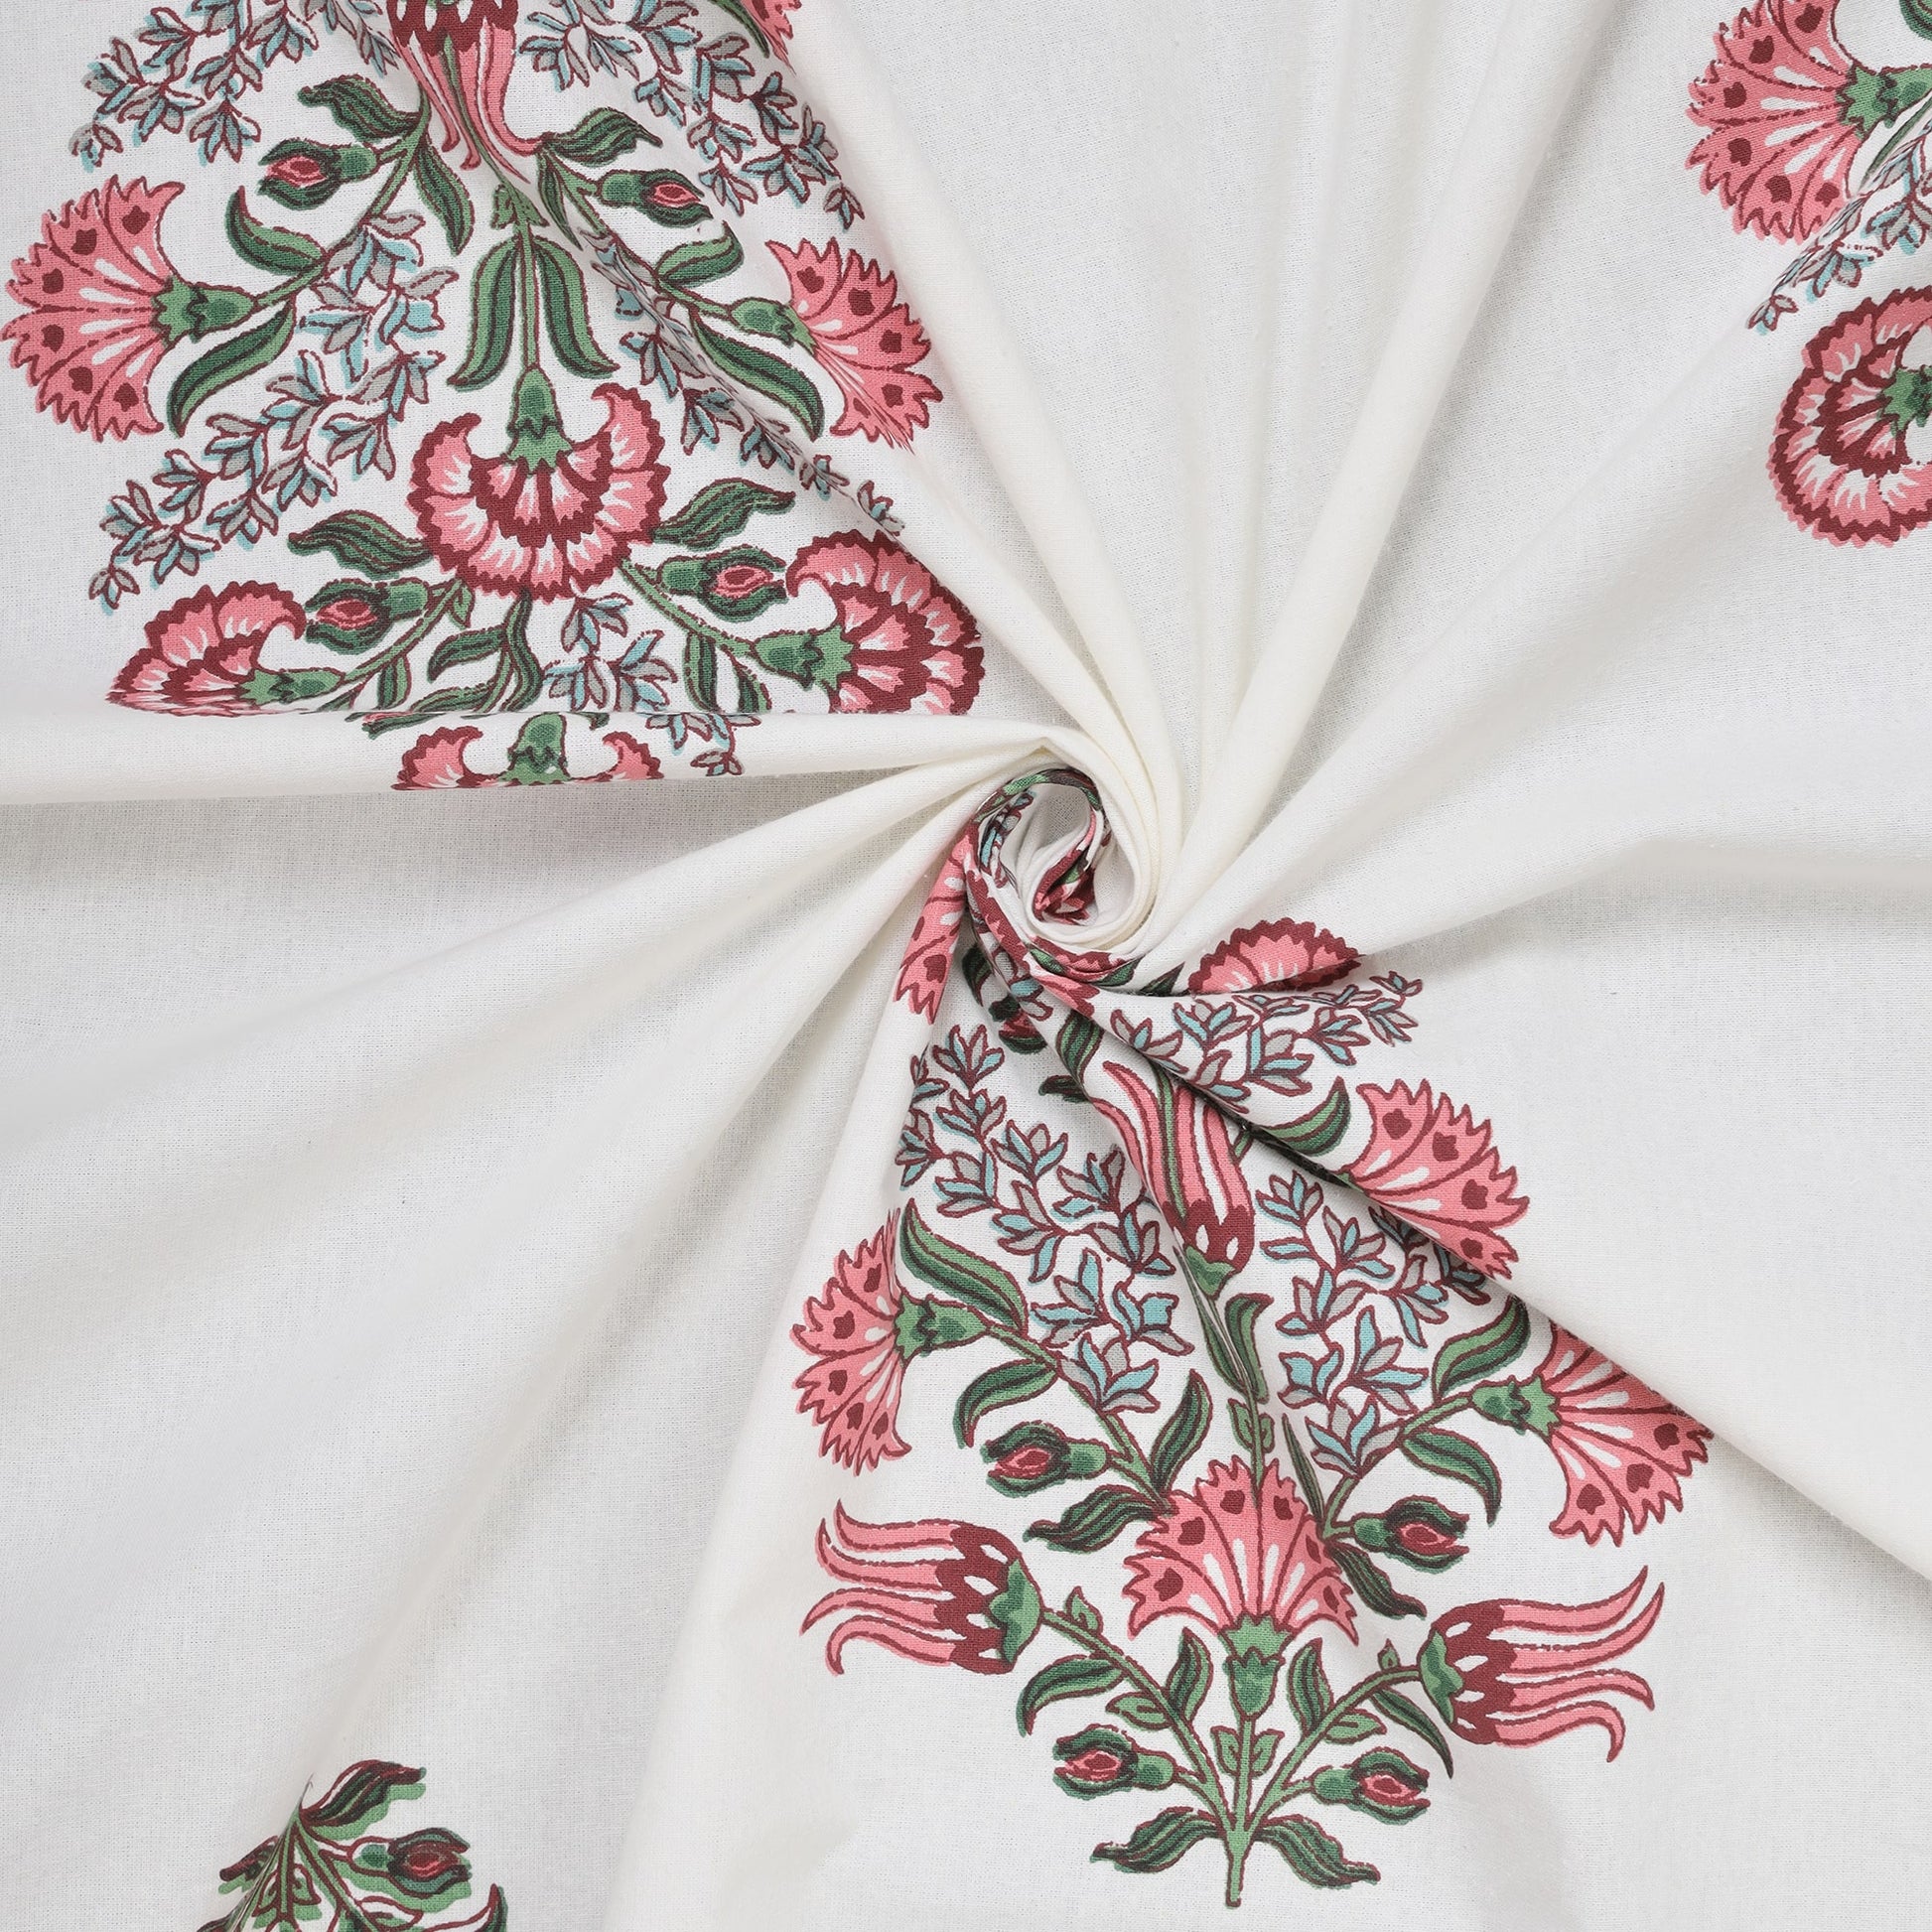 Pure Cotton Block Print Jaipuri Bedsheet - Super King Size 108*108 inches - Multicolor Floral Print